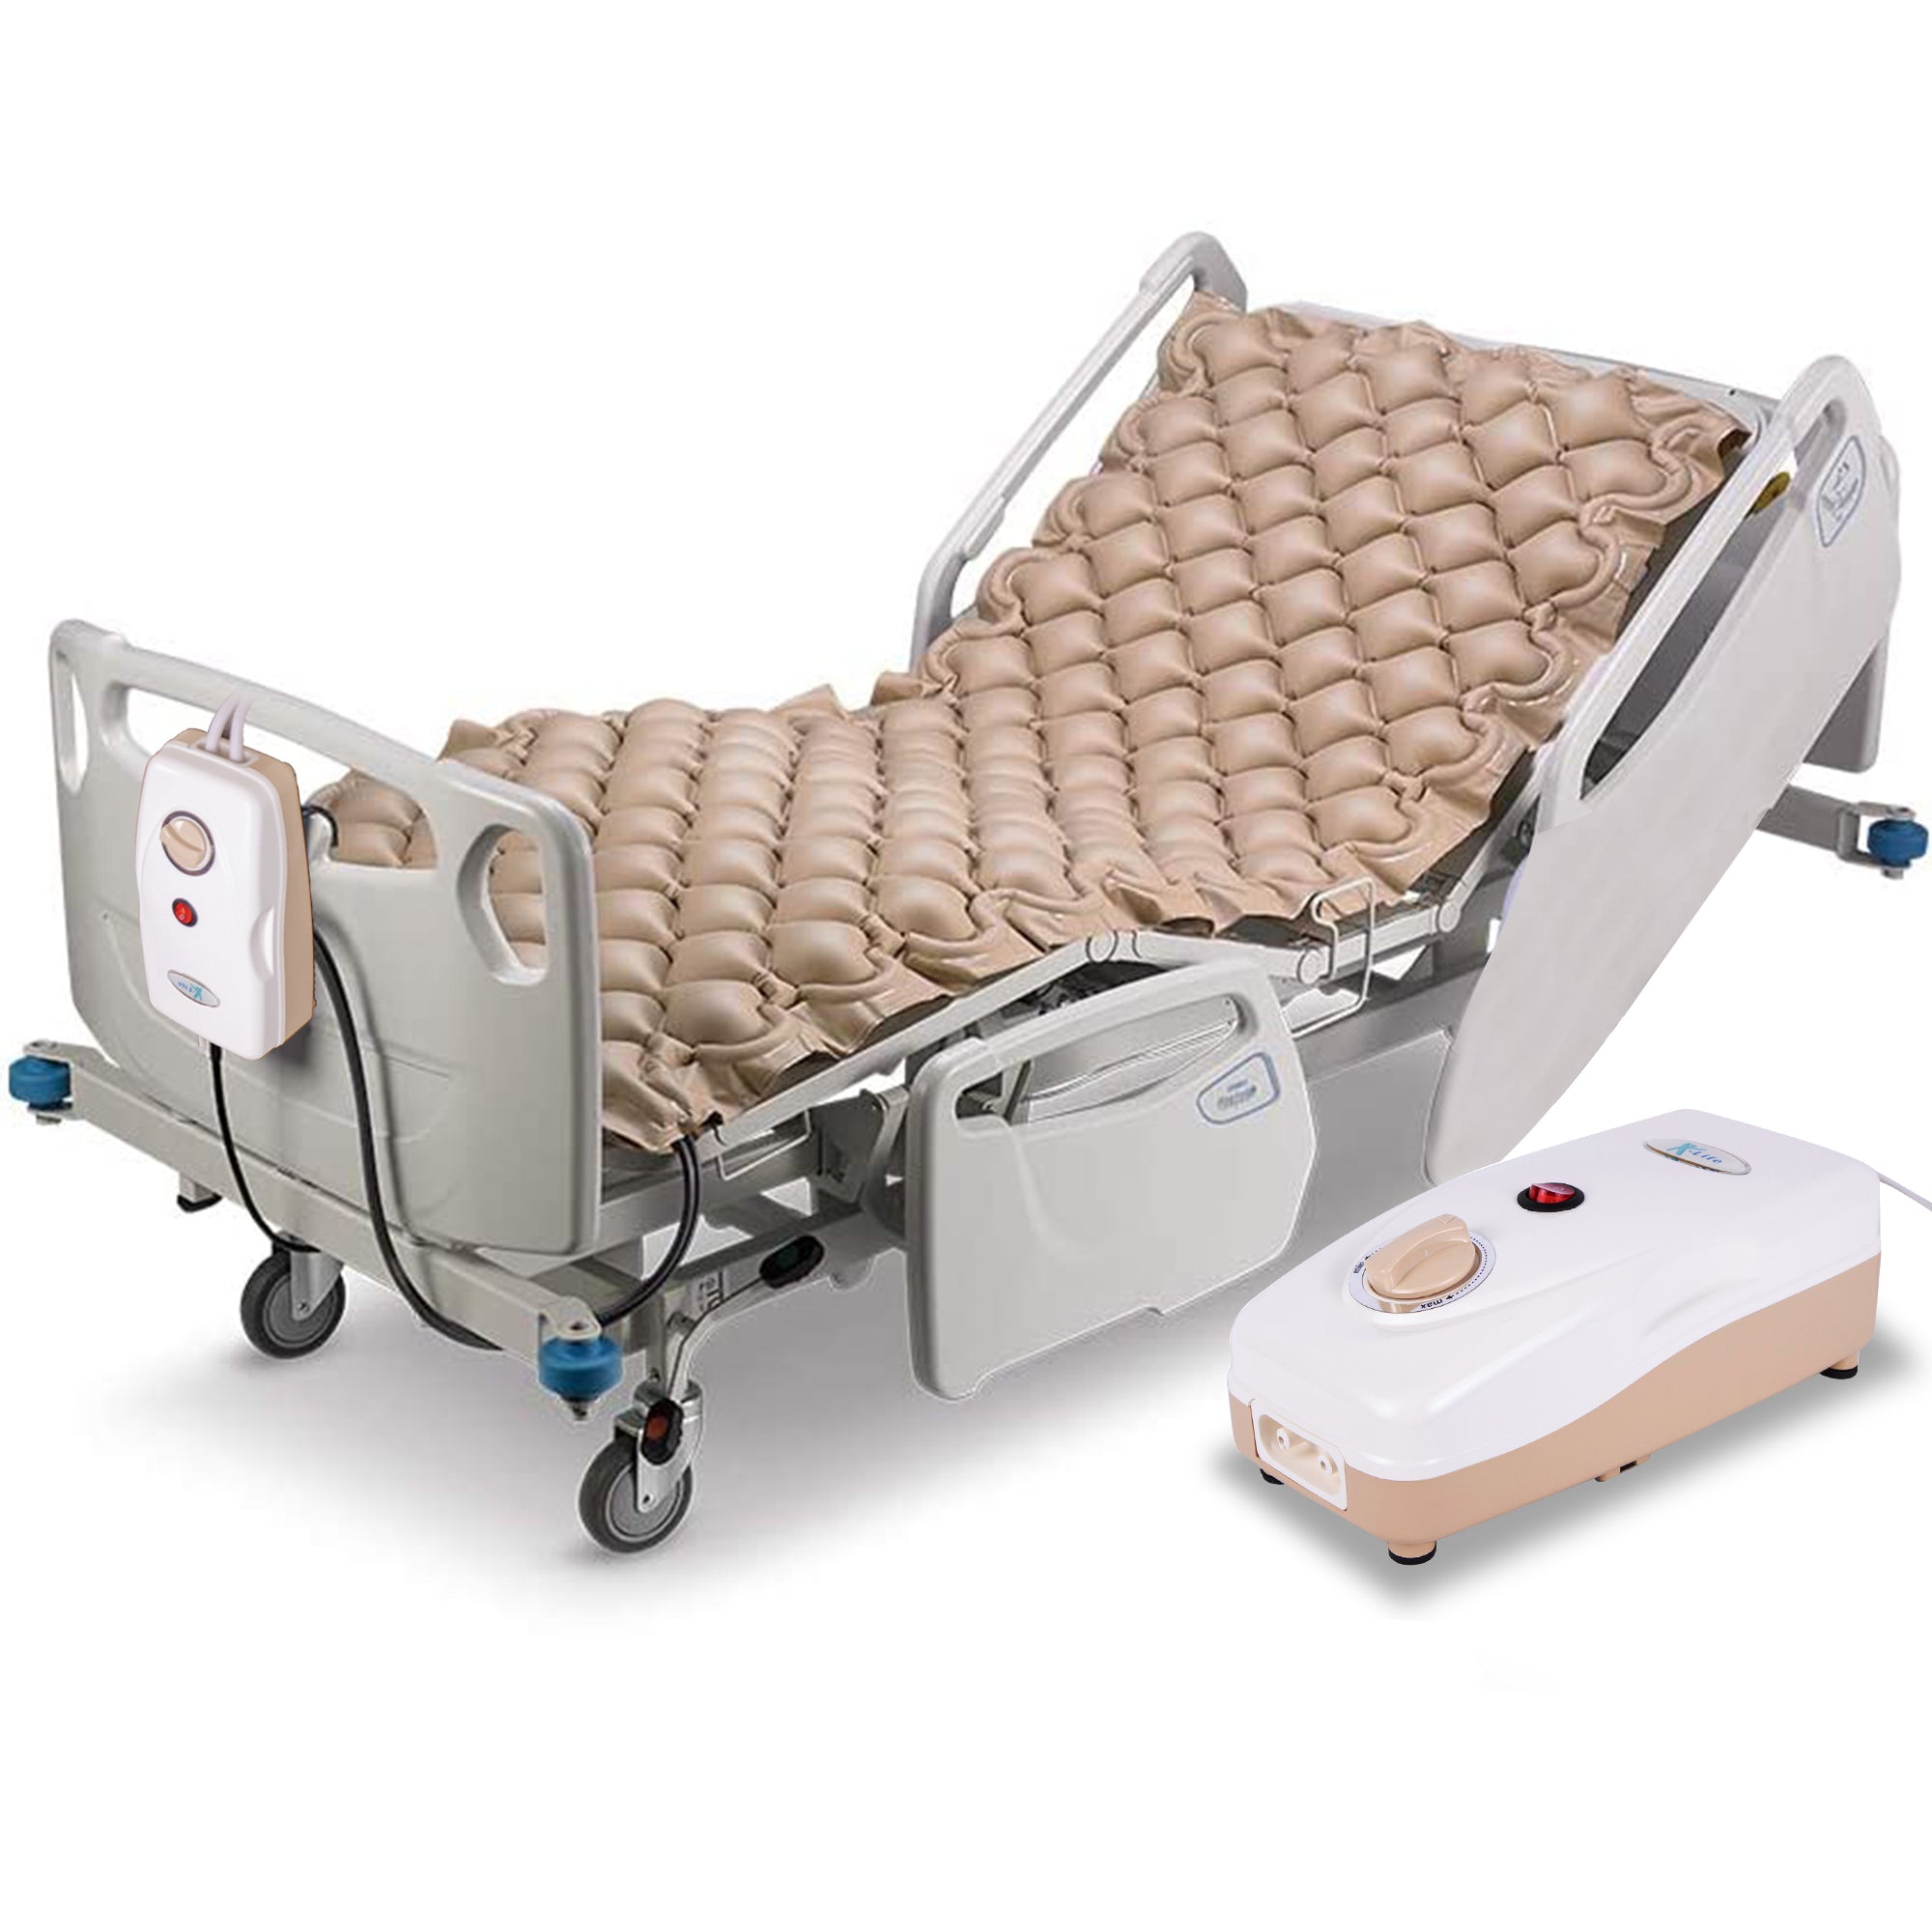 K-life AM-101 Portable Anti Decubitus Air Bed Adjustable Pump System Medical Grade PVC Bubble Mattress for Prevention of Bed Sores Patients